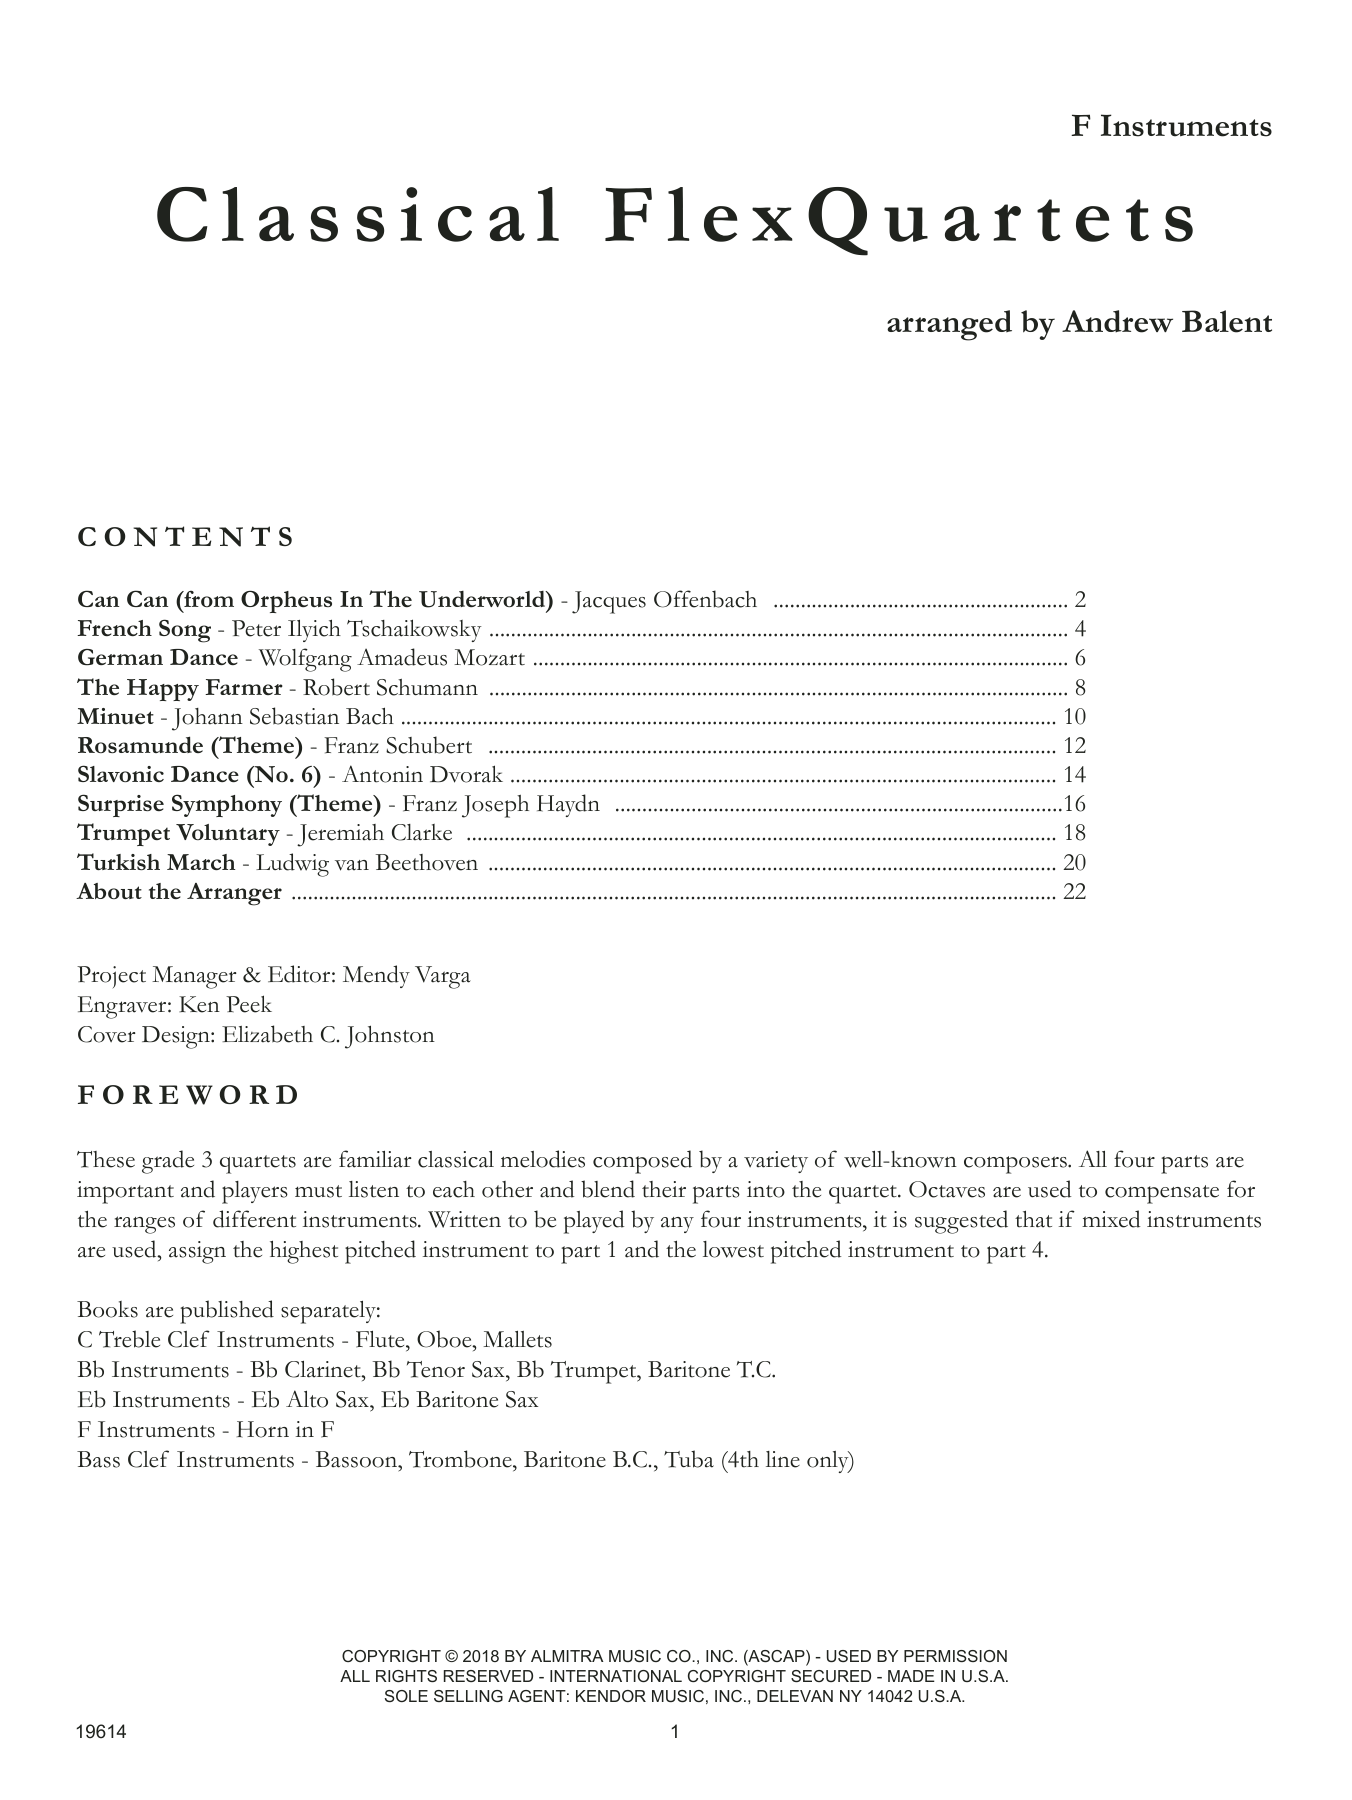 Download Andrew Balent Classical Flexquartets - F Instruments Sheet Music